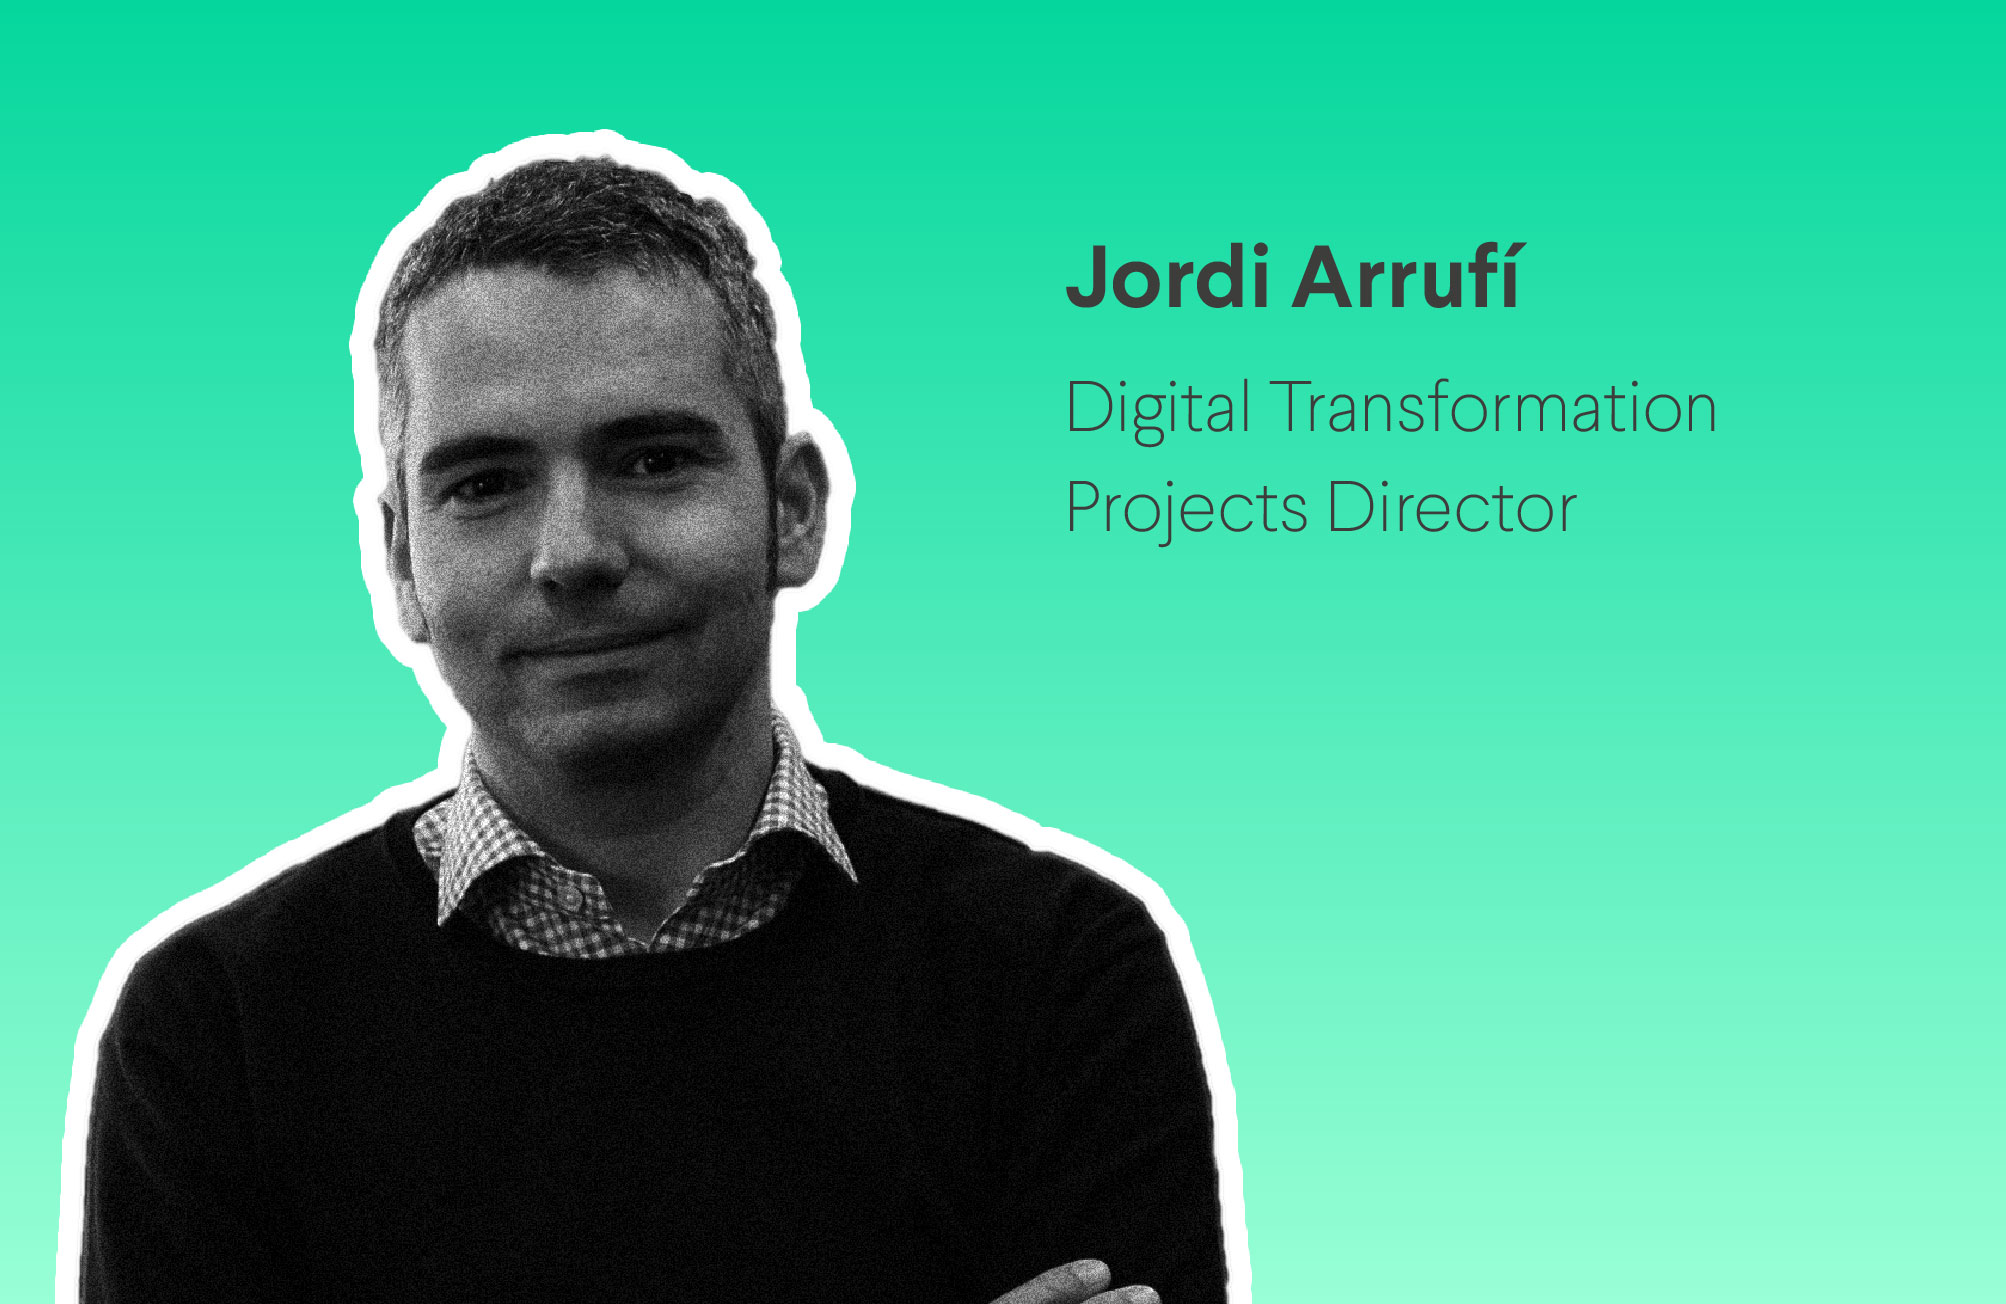 Jordi Arrufí: “Technology is abundant but Digital Talent remains scarce.”